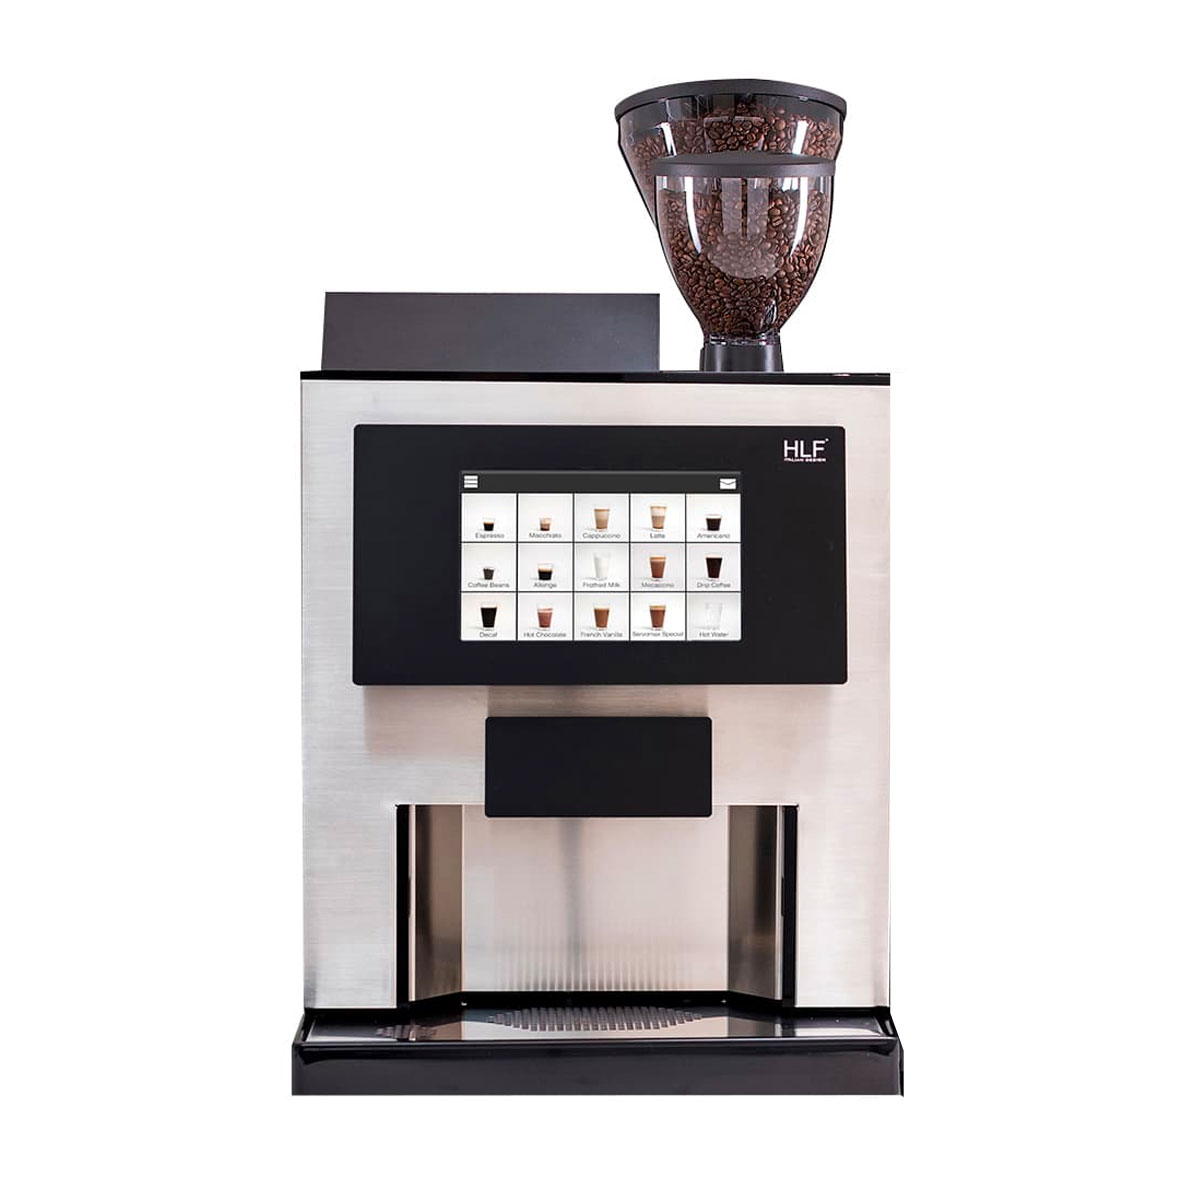 Office coffee machine HLF 4700